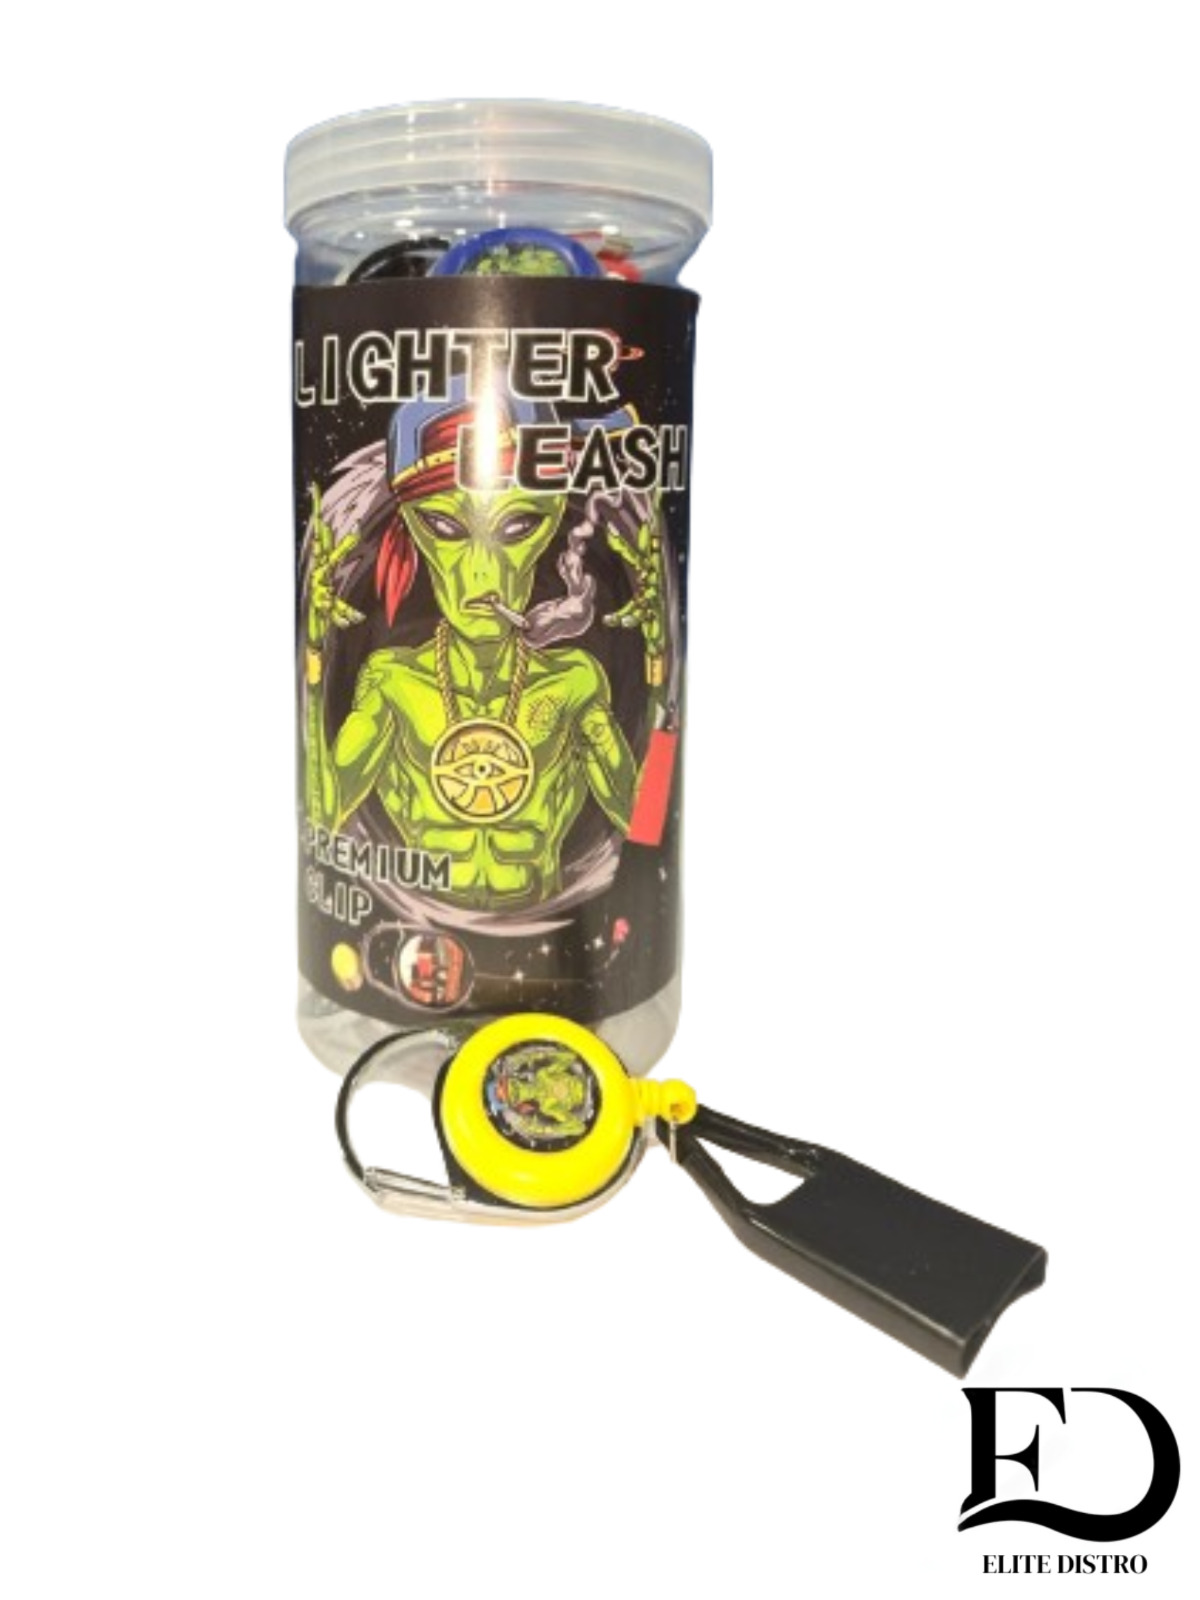 Full Jar 20 x Leashes Lighter Leash Premium Clip | Assorted Colors |[20/Jar]